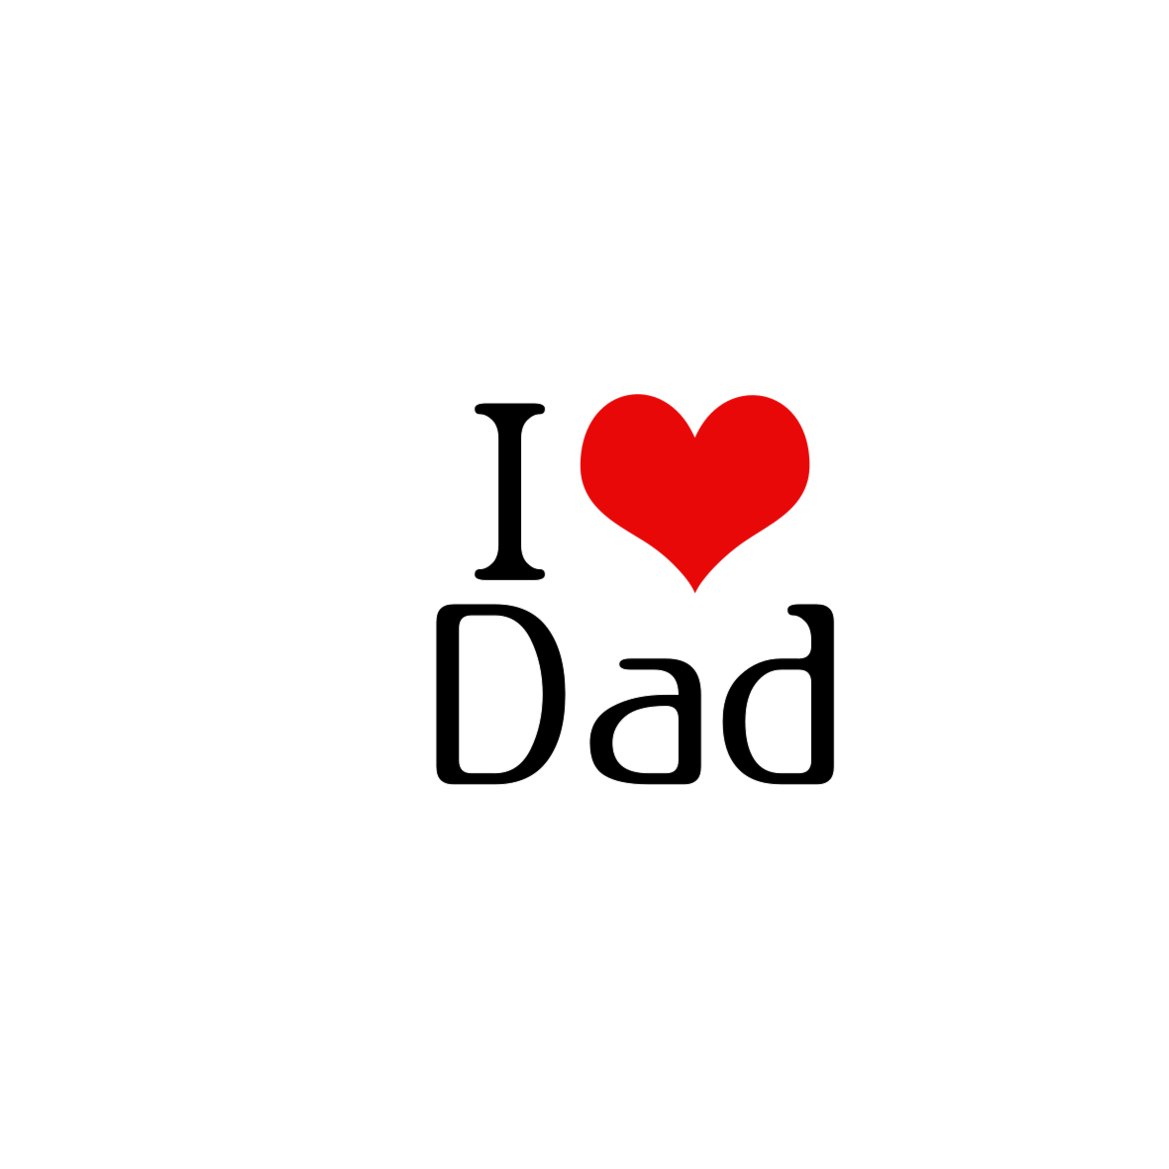 Dad Love HD Wallpaper In Imageci